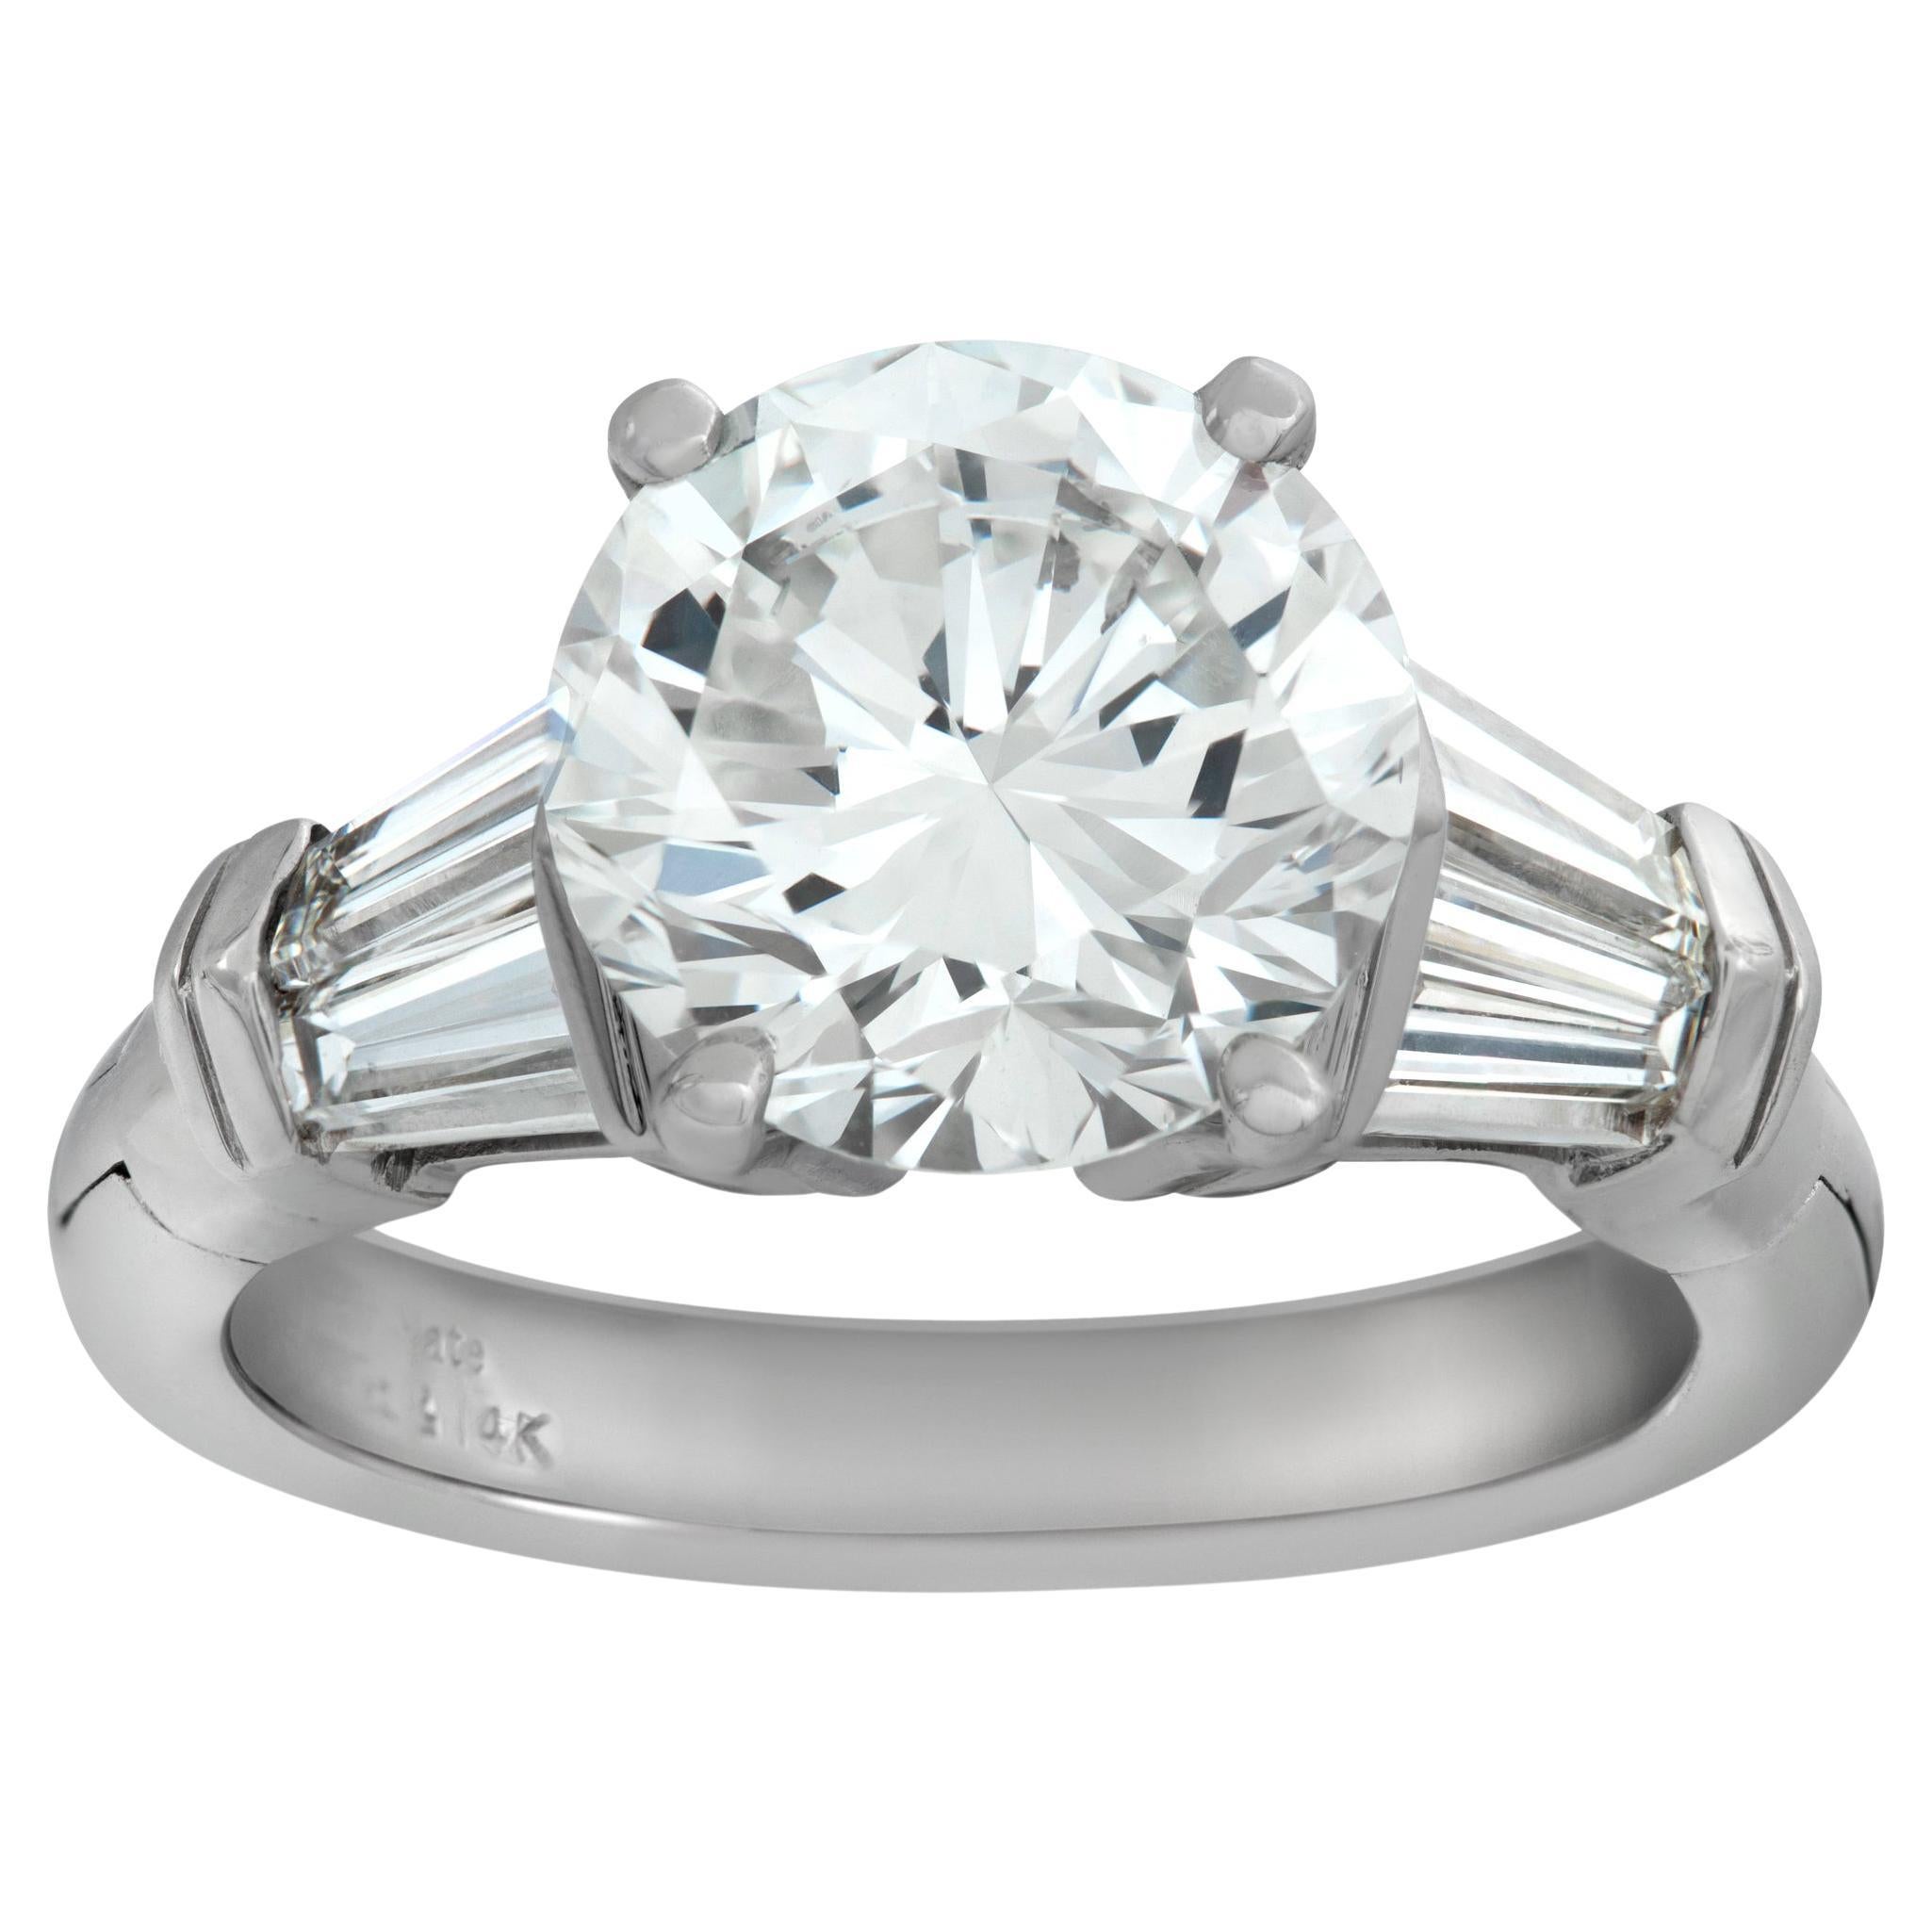 GIA Certified round brilliant cut 3.09 carat diamond platinum & white gold ring